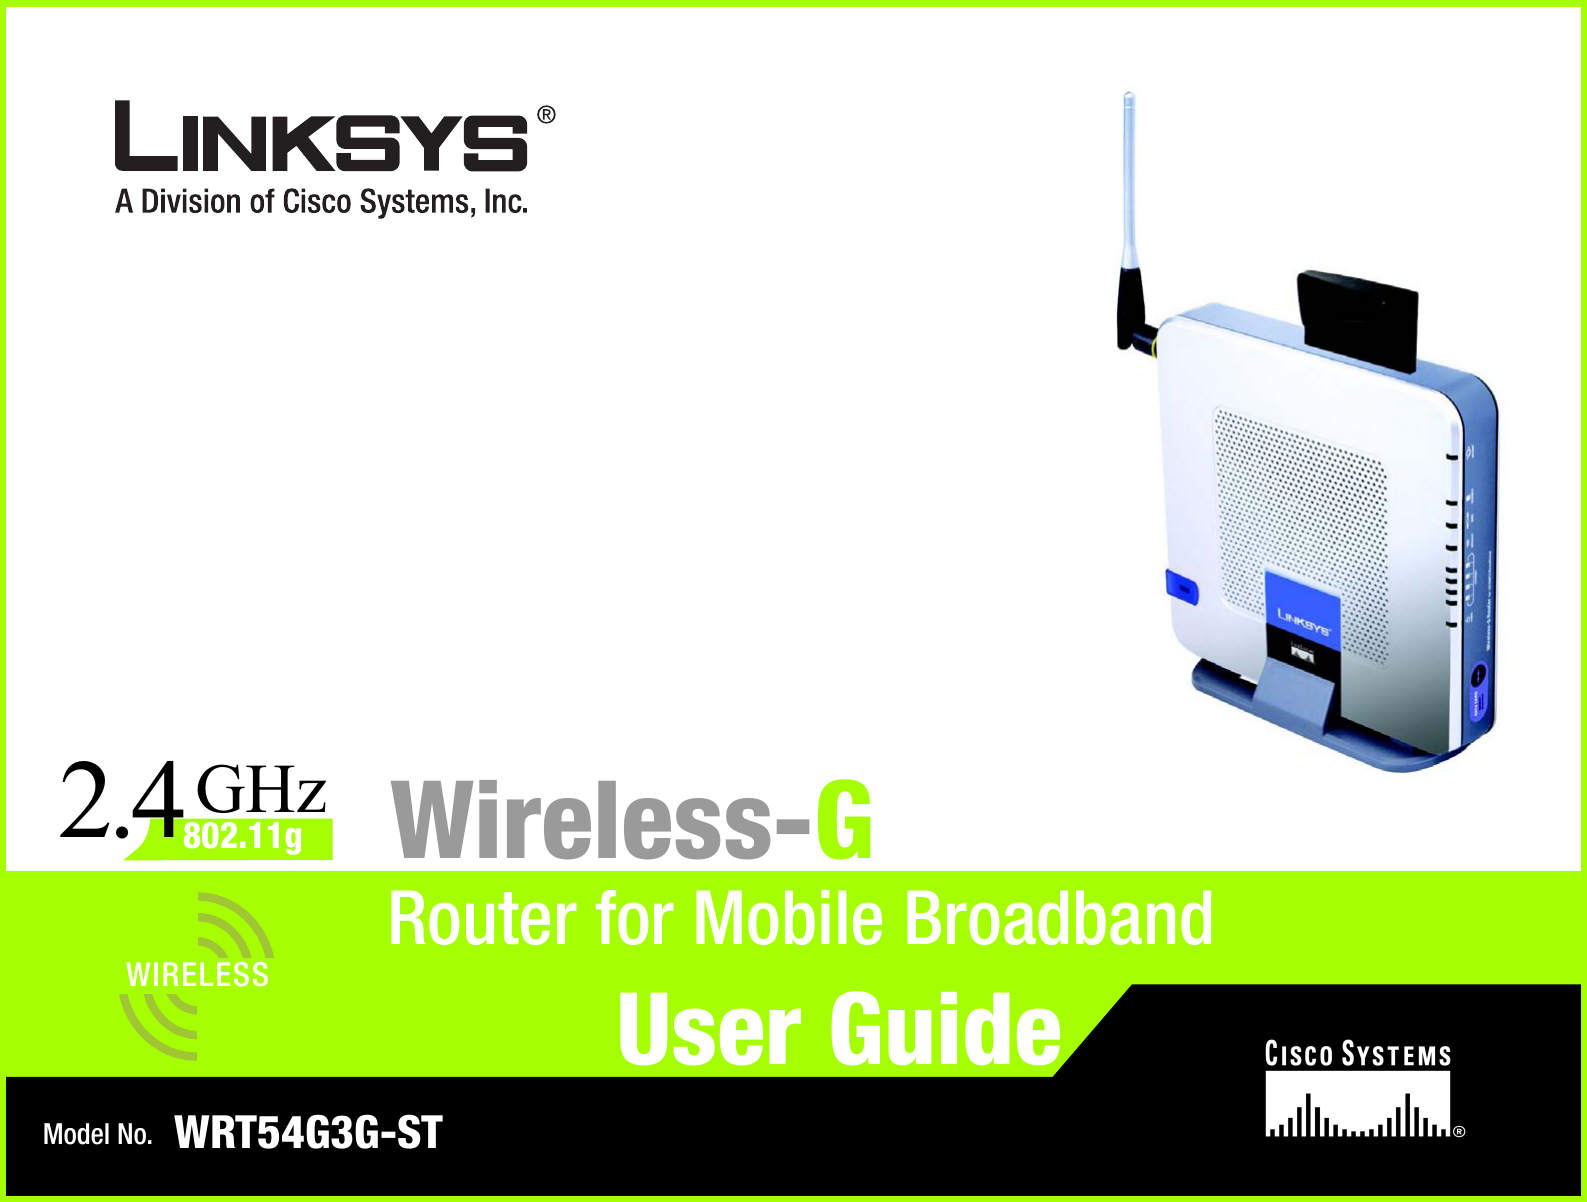 Model No.Router for Mobile BroadbandWireless-GWRT54G3G-STUser GuideWIRELESSGHz802.11g2.4